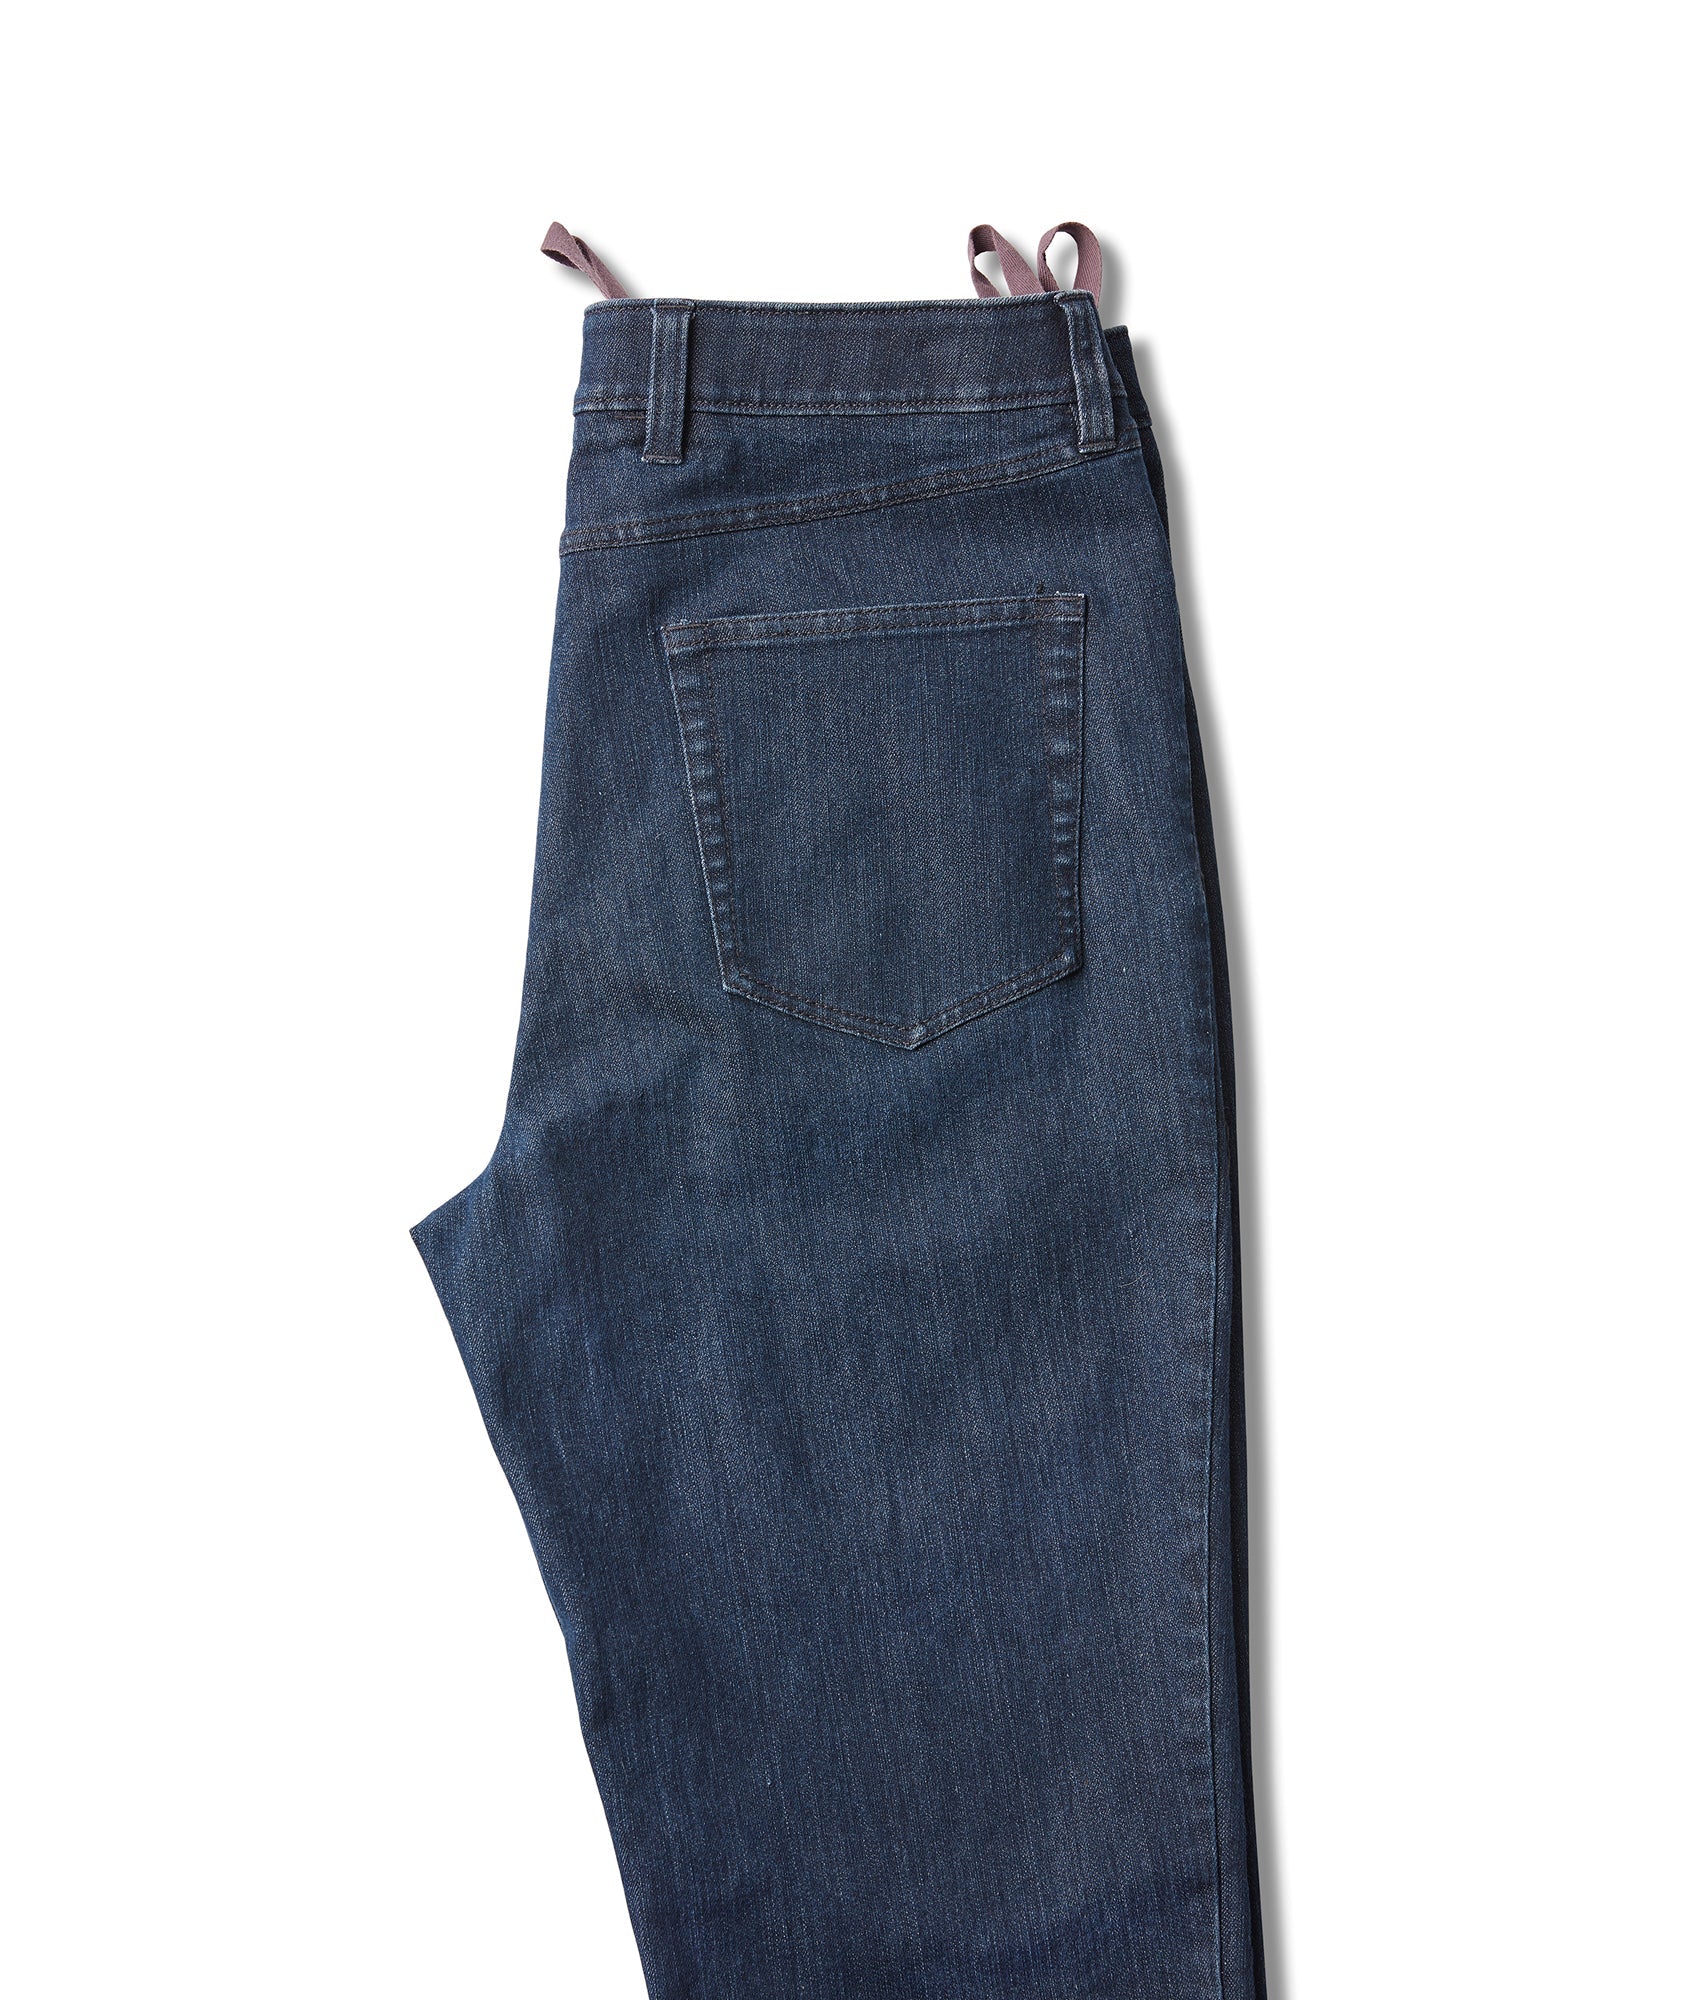 Denim 'MVP' Five Pocket Jean with Magnetic Closures - Indigo